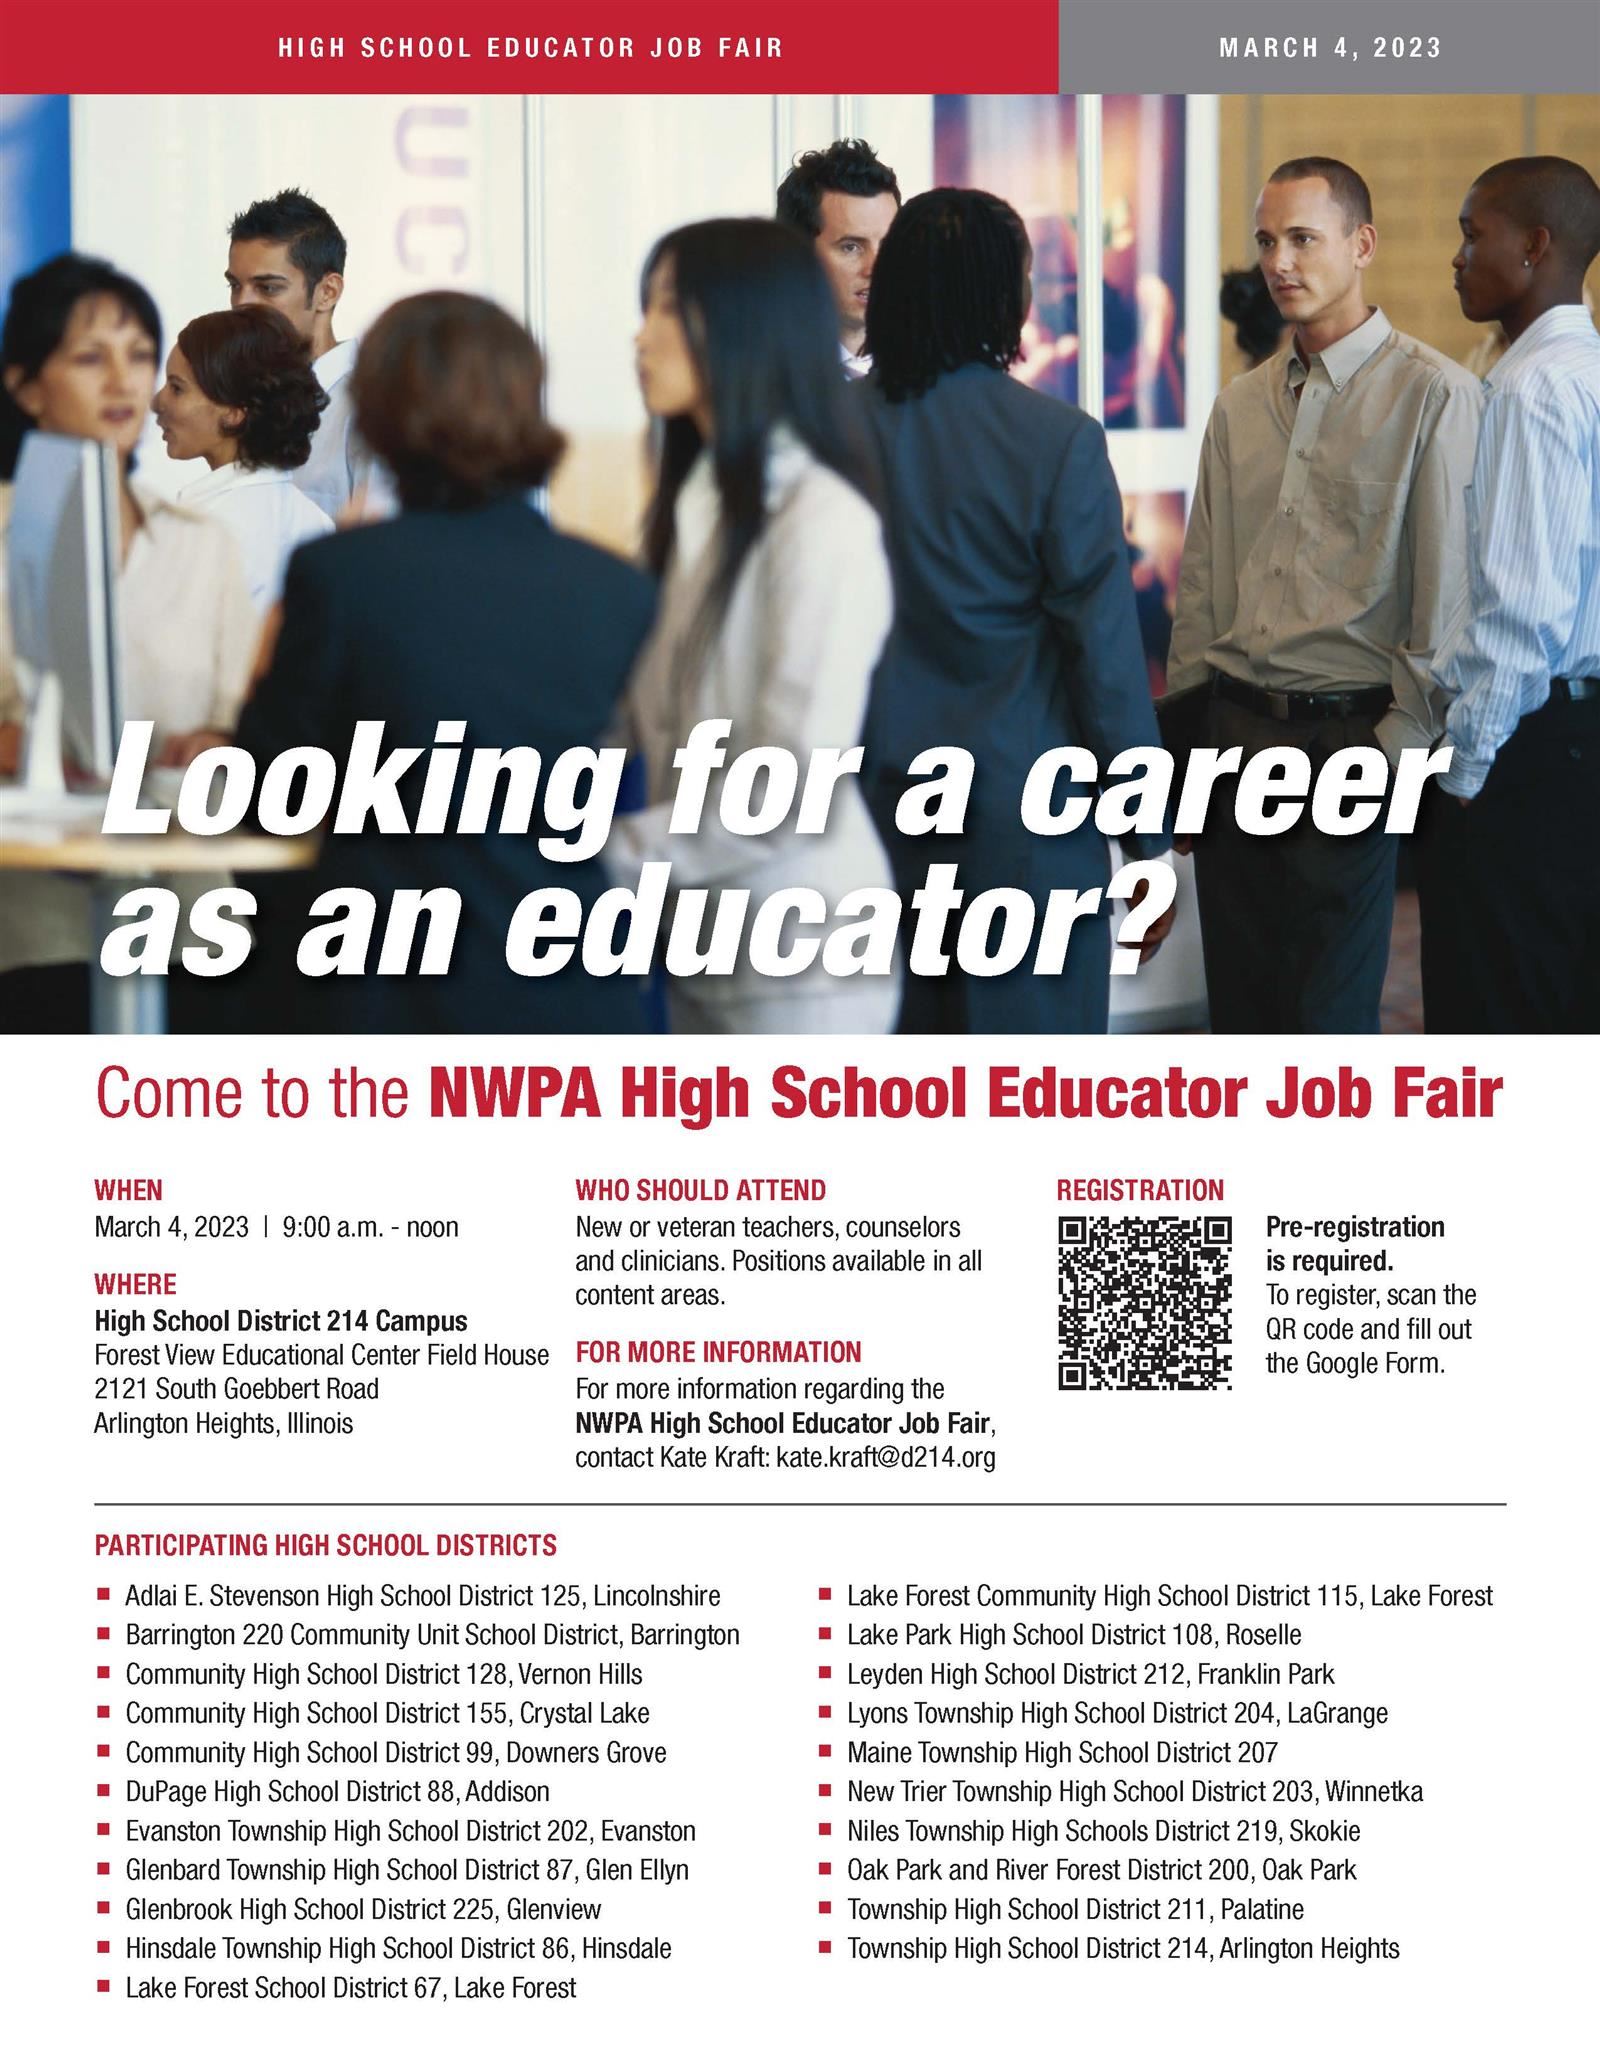  NWPA High School Educator Job Fair poster